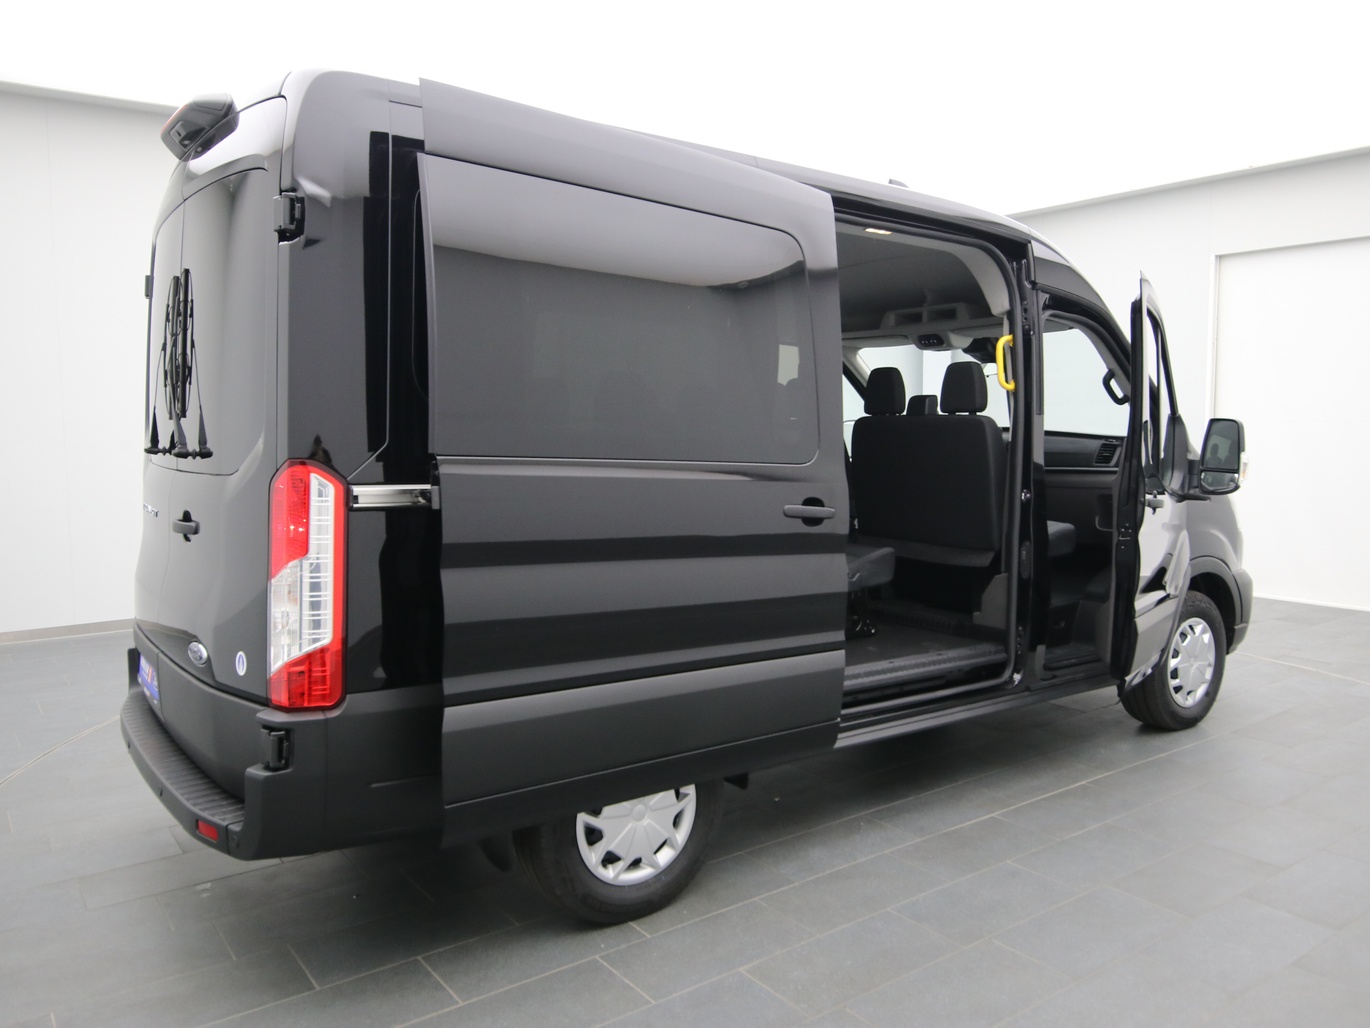  Ford Transit Kombi 350 L2H2 Trend 150PS / Klima in Agate Black 